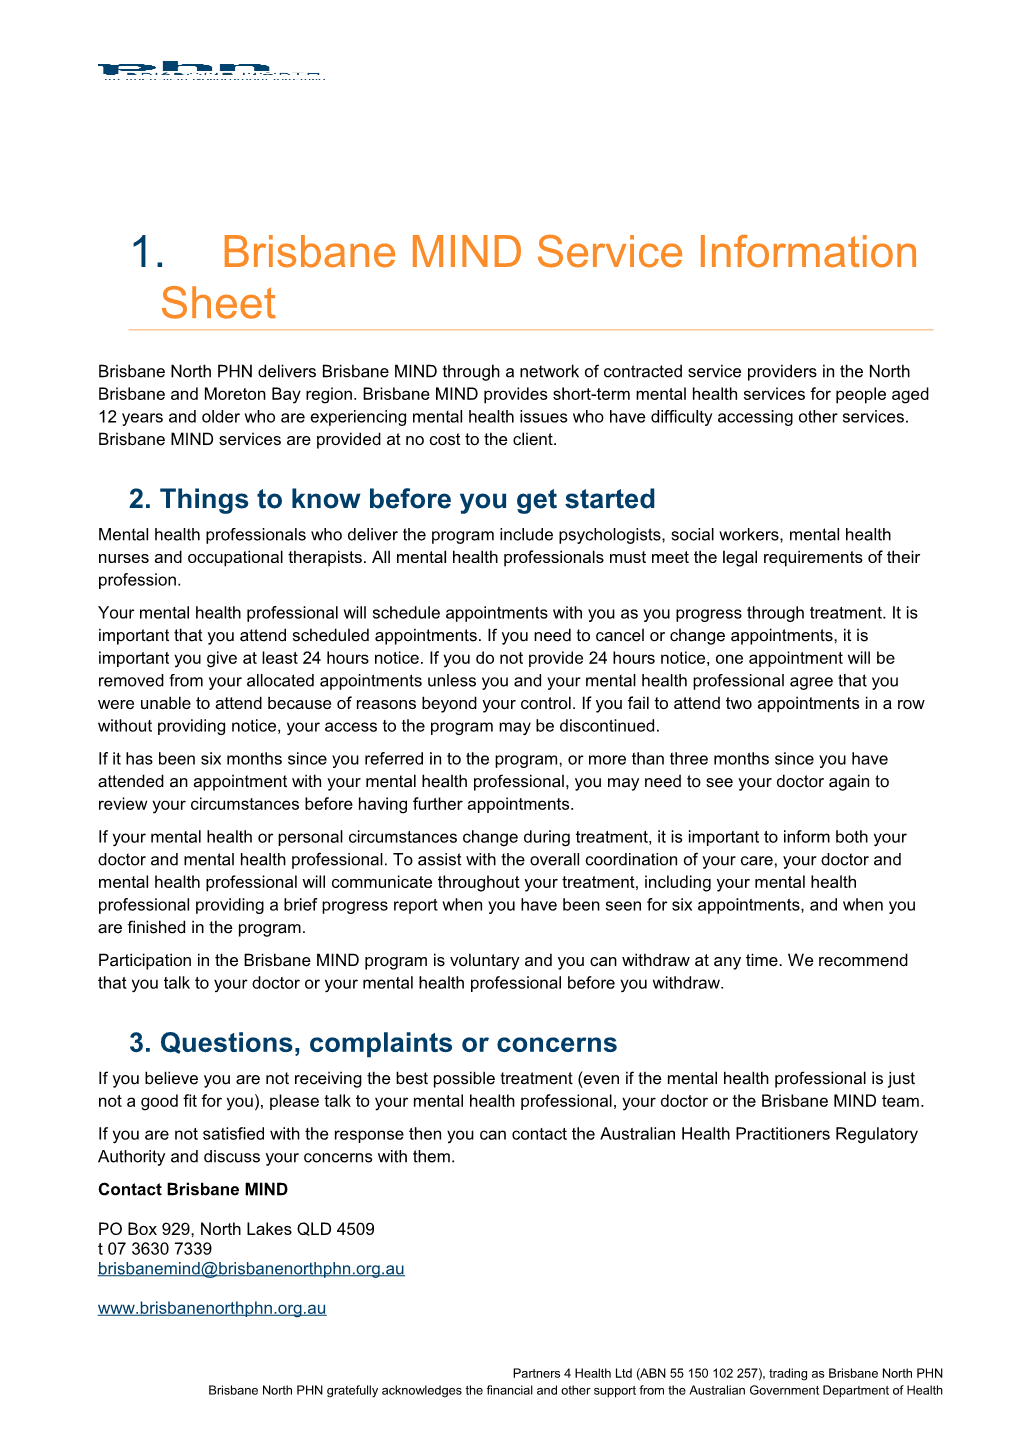 Brisbane MIND Service Information Sheet